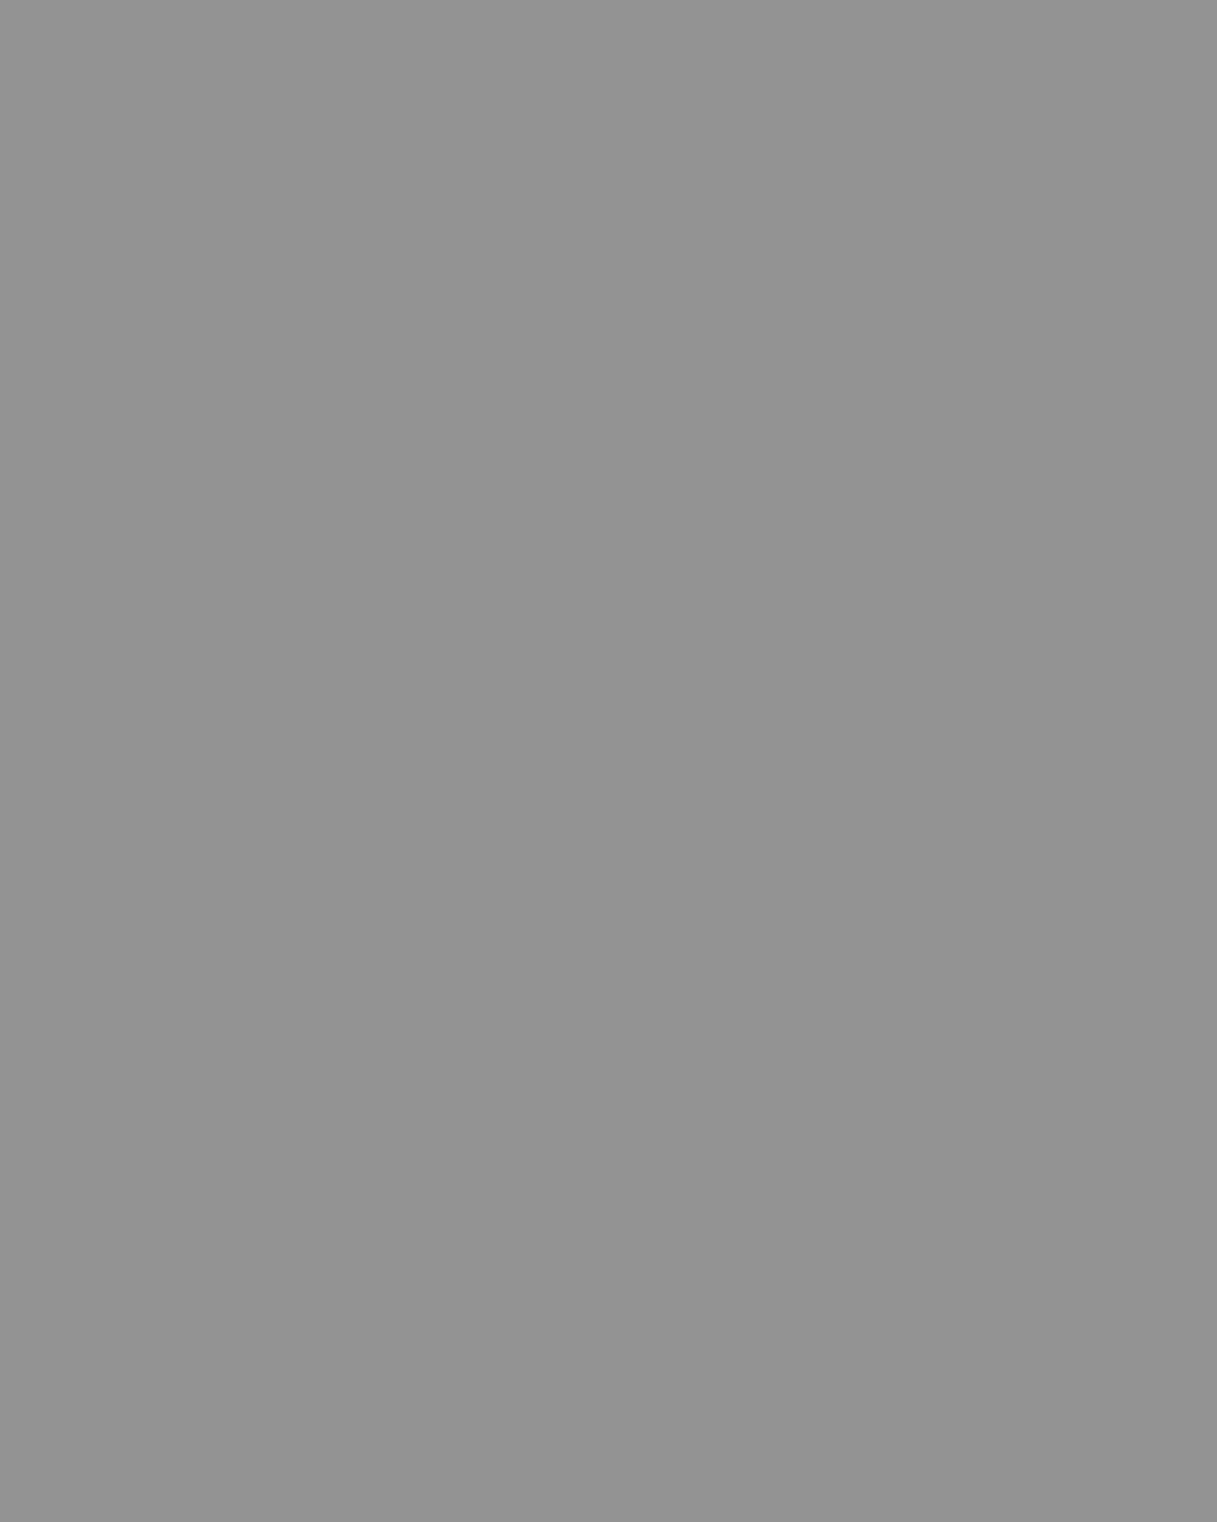 Болгарский поэт Асен Босев (фрагмент). Фотография: Вени Марковски / <a href="https://commons.wikimedia.org/wiki/File:Assen_Bossev.jpg" target="_blank">commons.wikimedia.org</a>